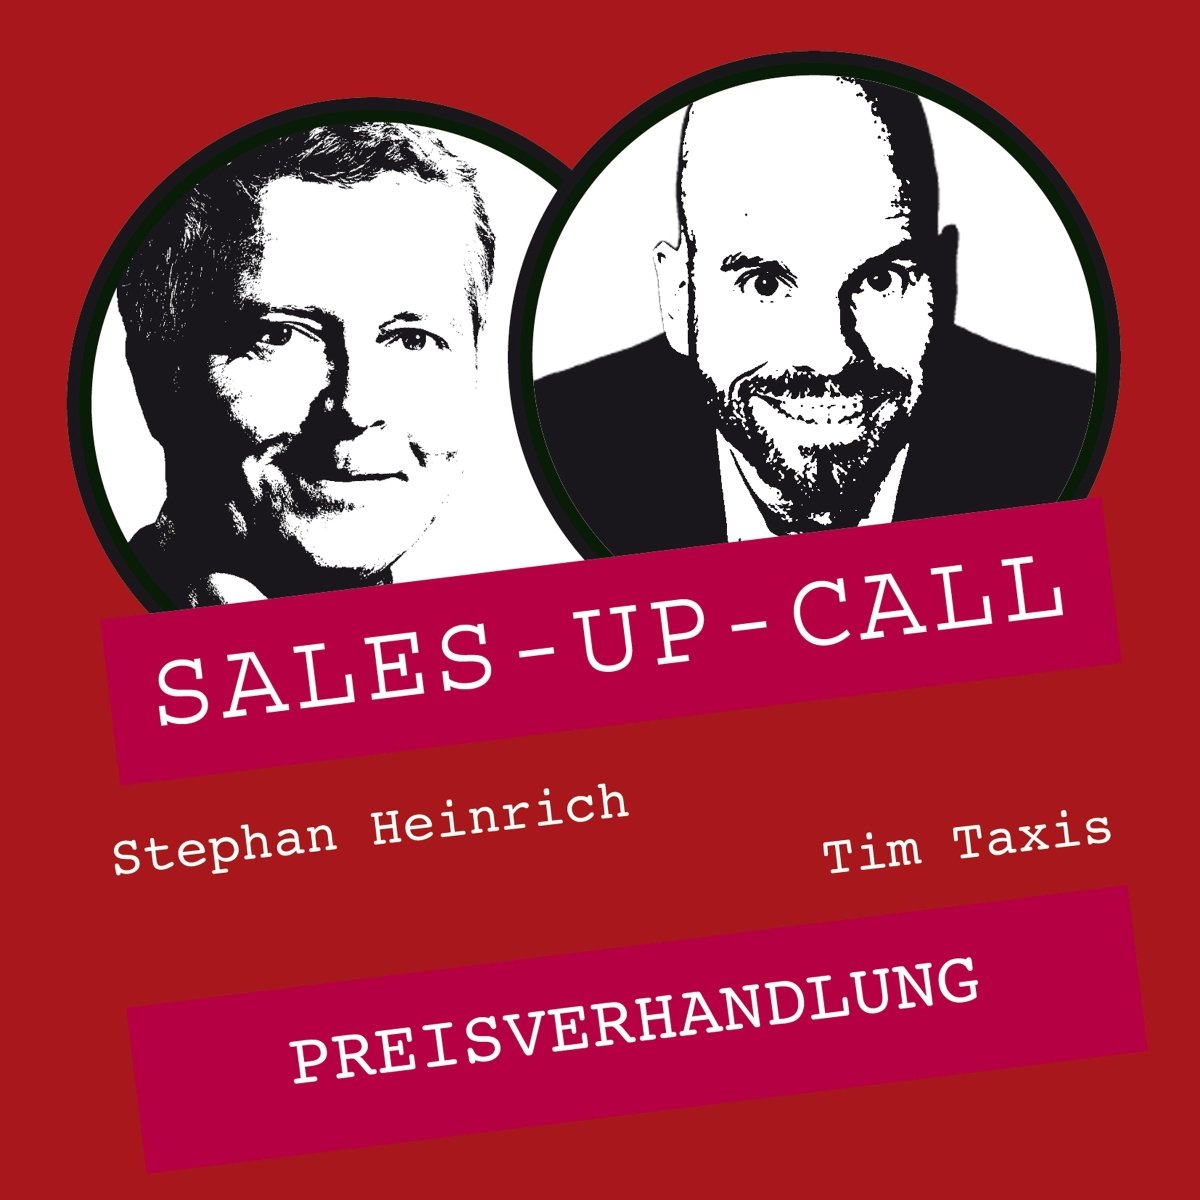 Preisverhandlung - Sales-up-Call - Stephan Heinrich